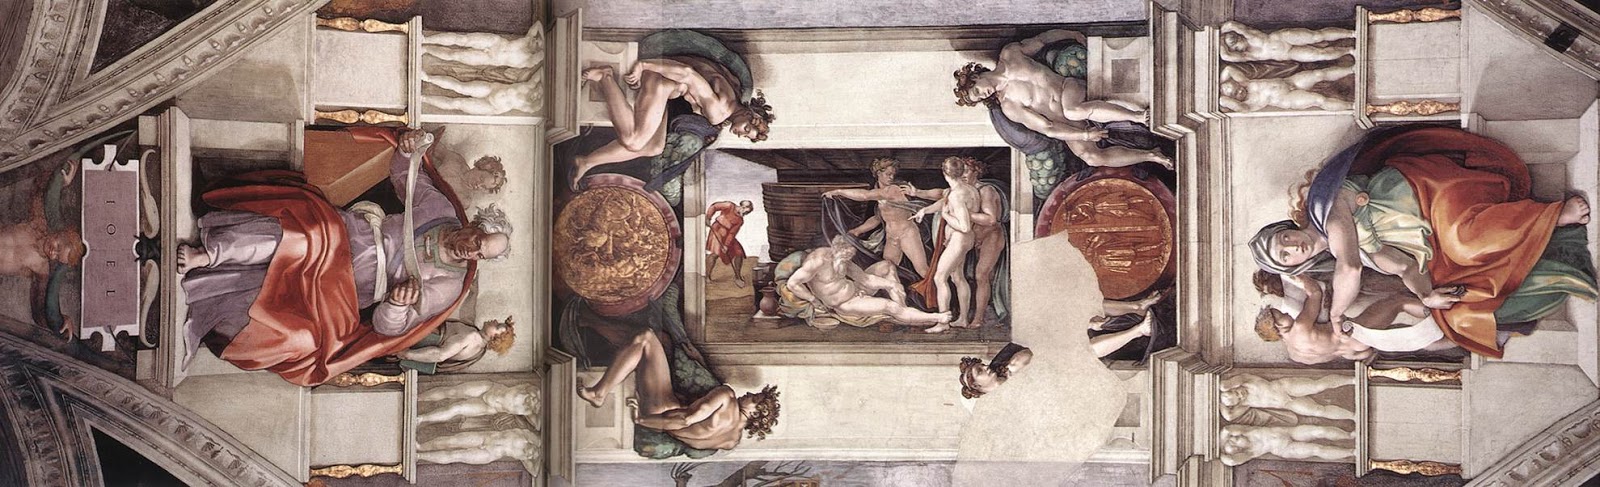 Michelangelo+Buonarroti-1475-1564 (374).jpg